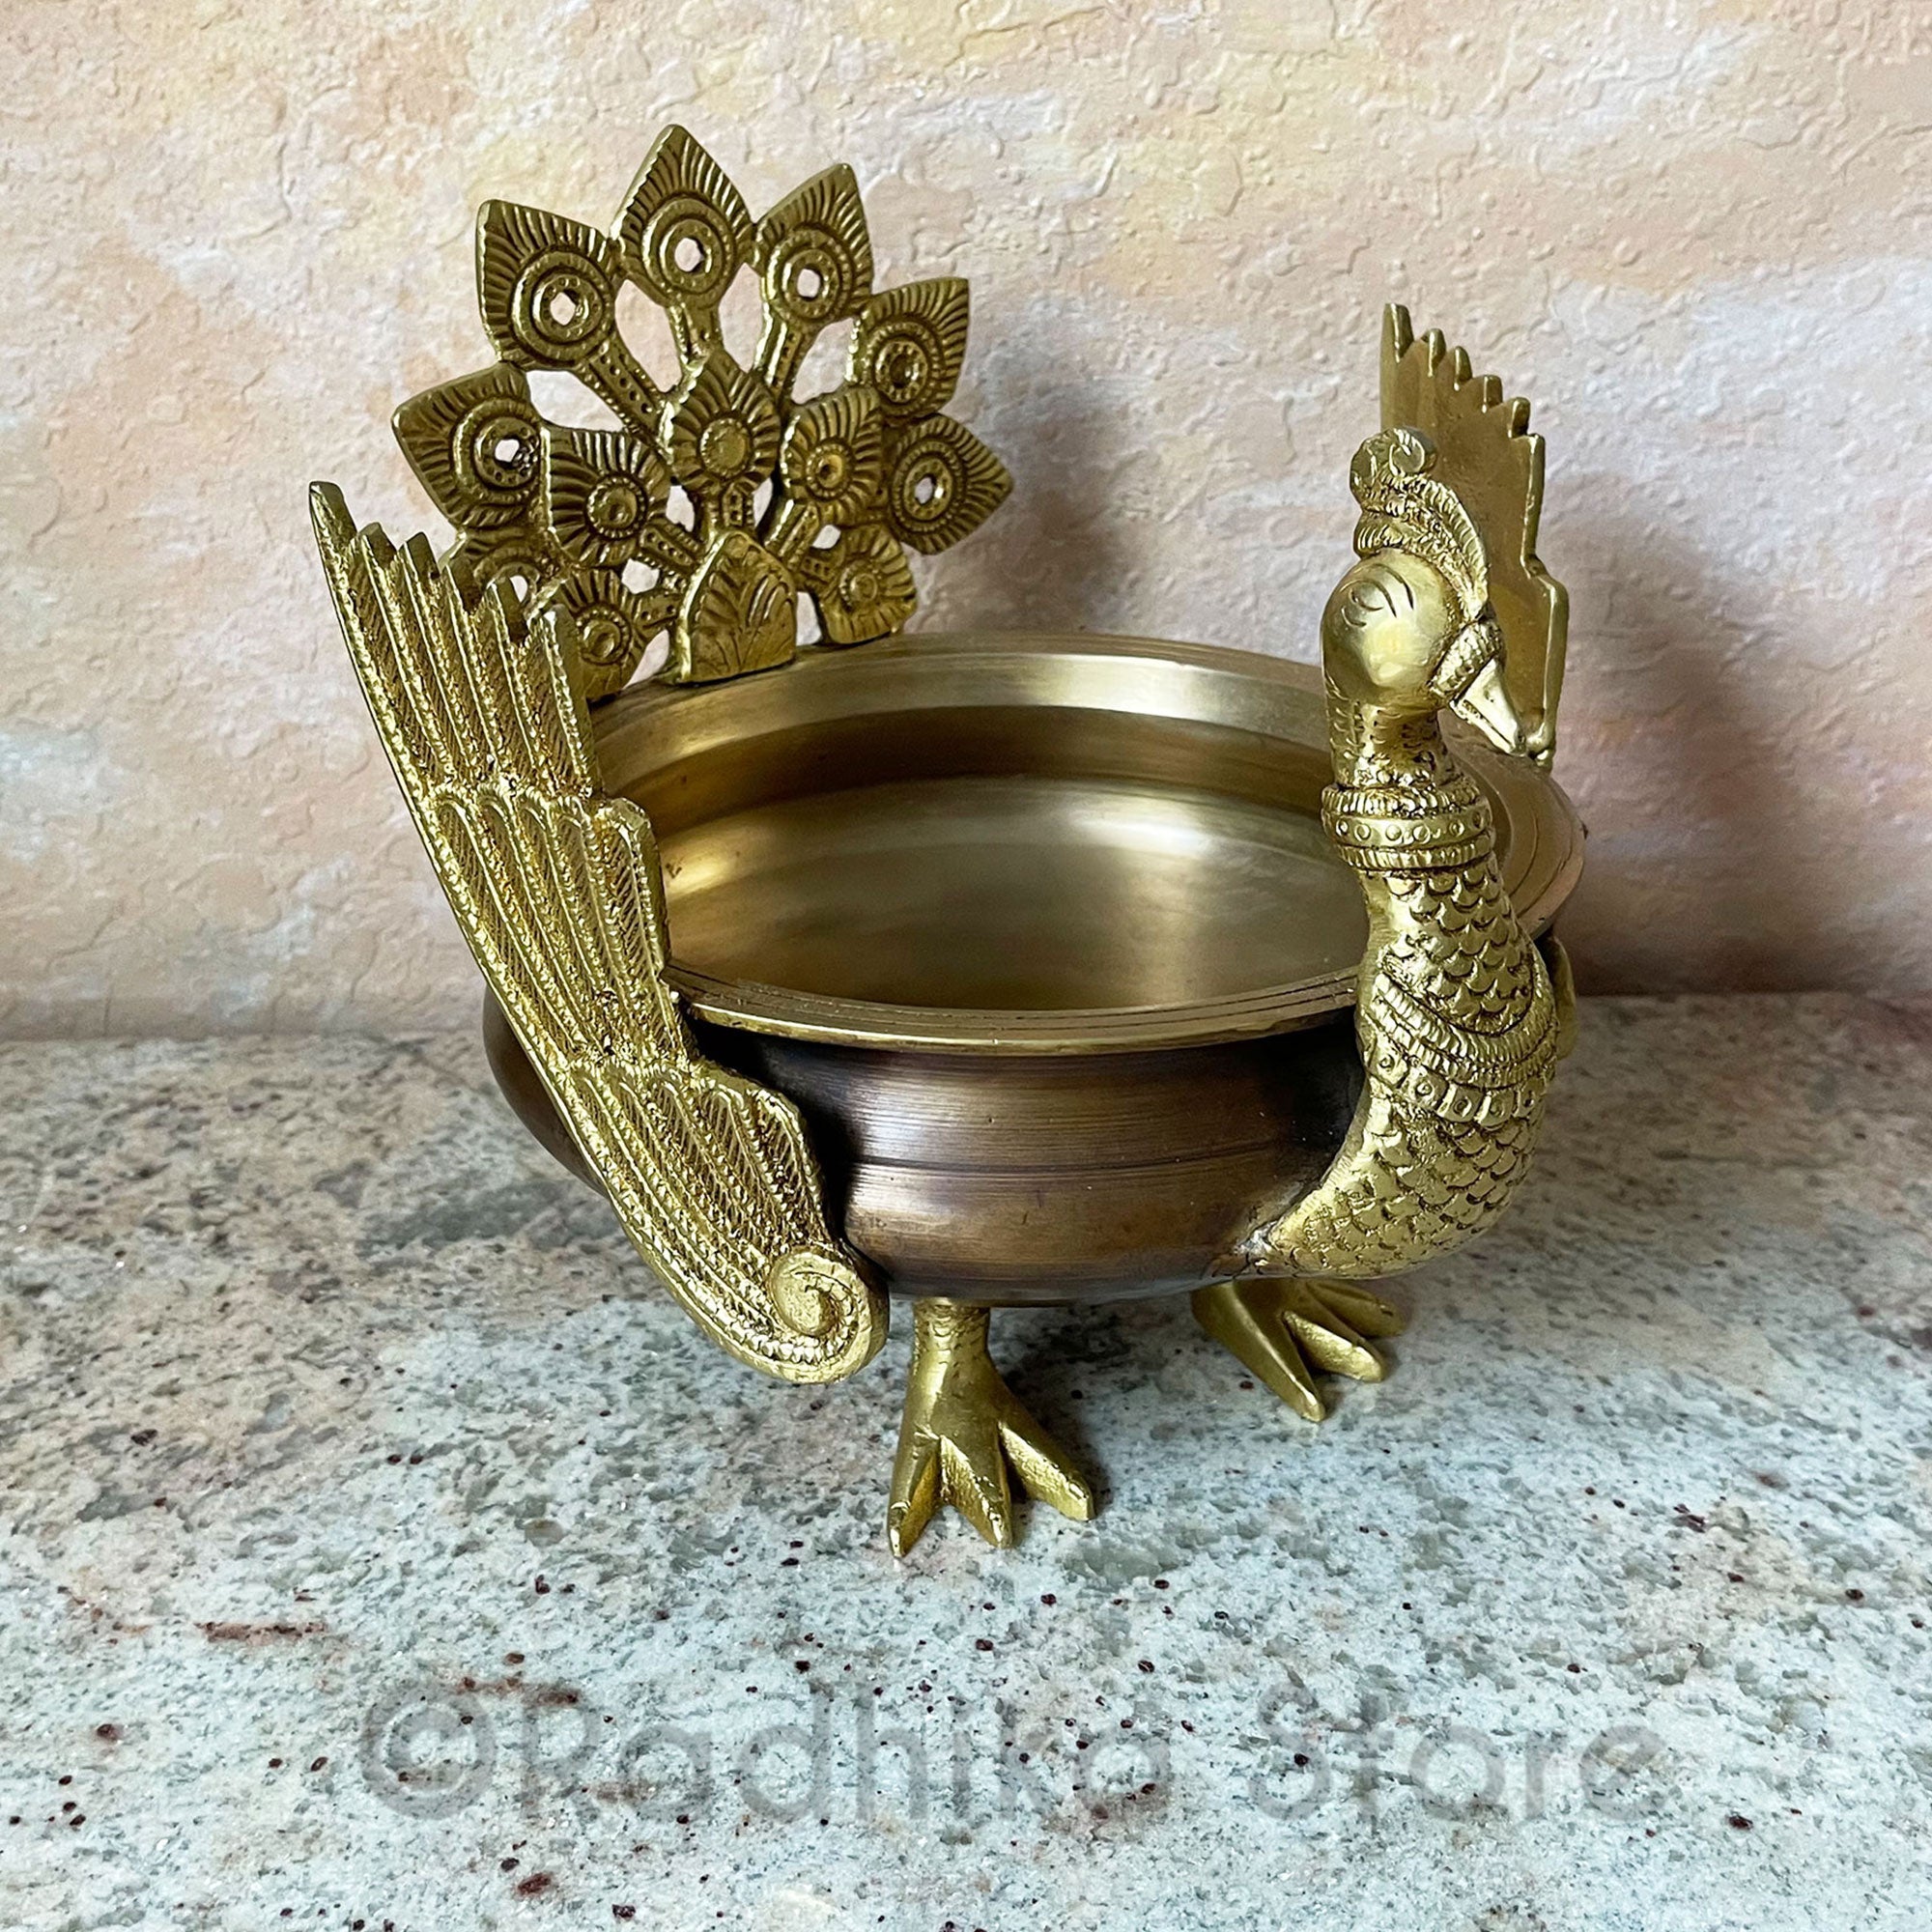 Urli - Peacock Design -  Deity Bathing Bowl With Bells- Solid Heavy Brass